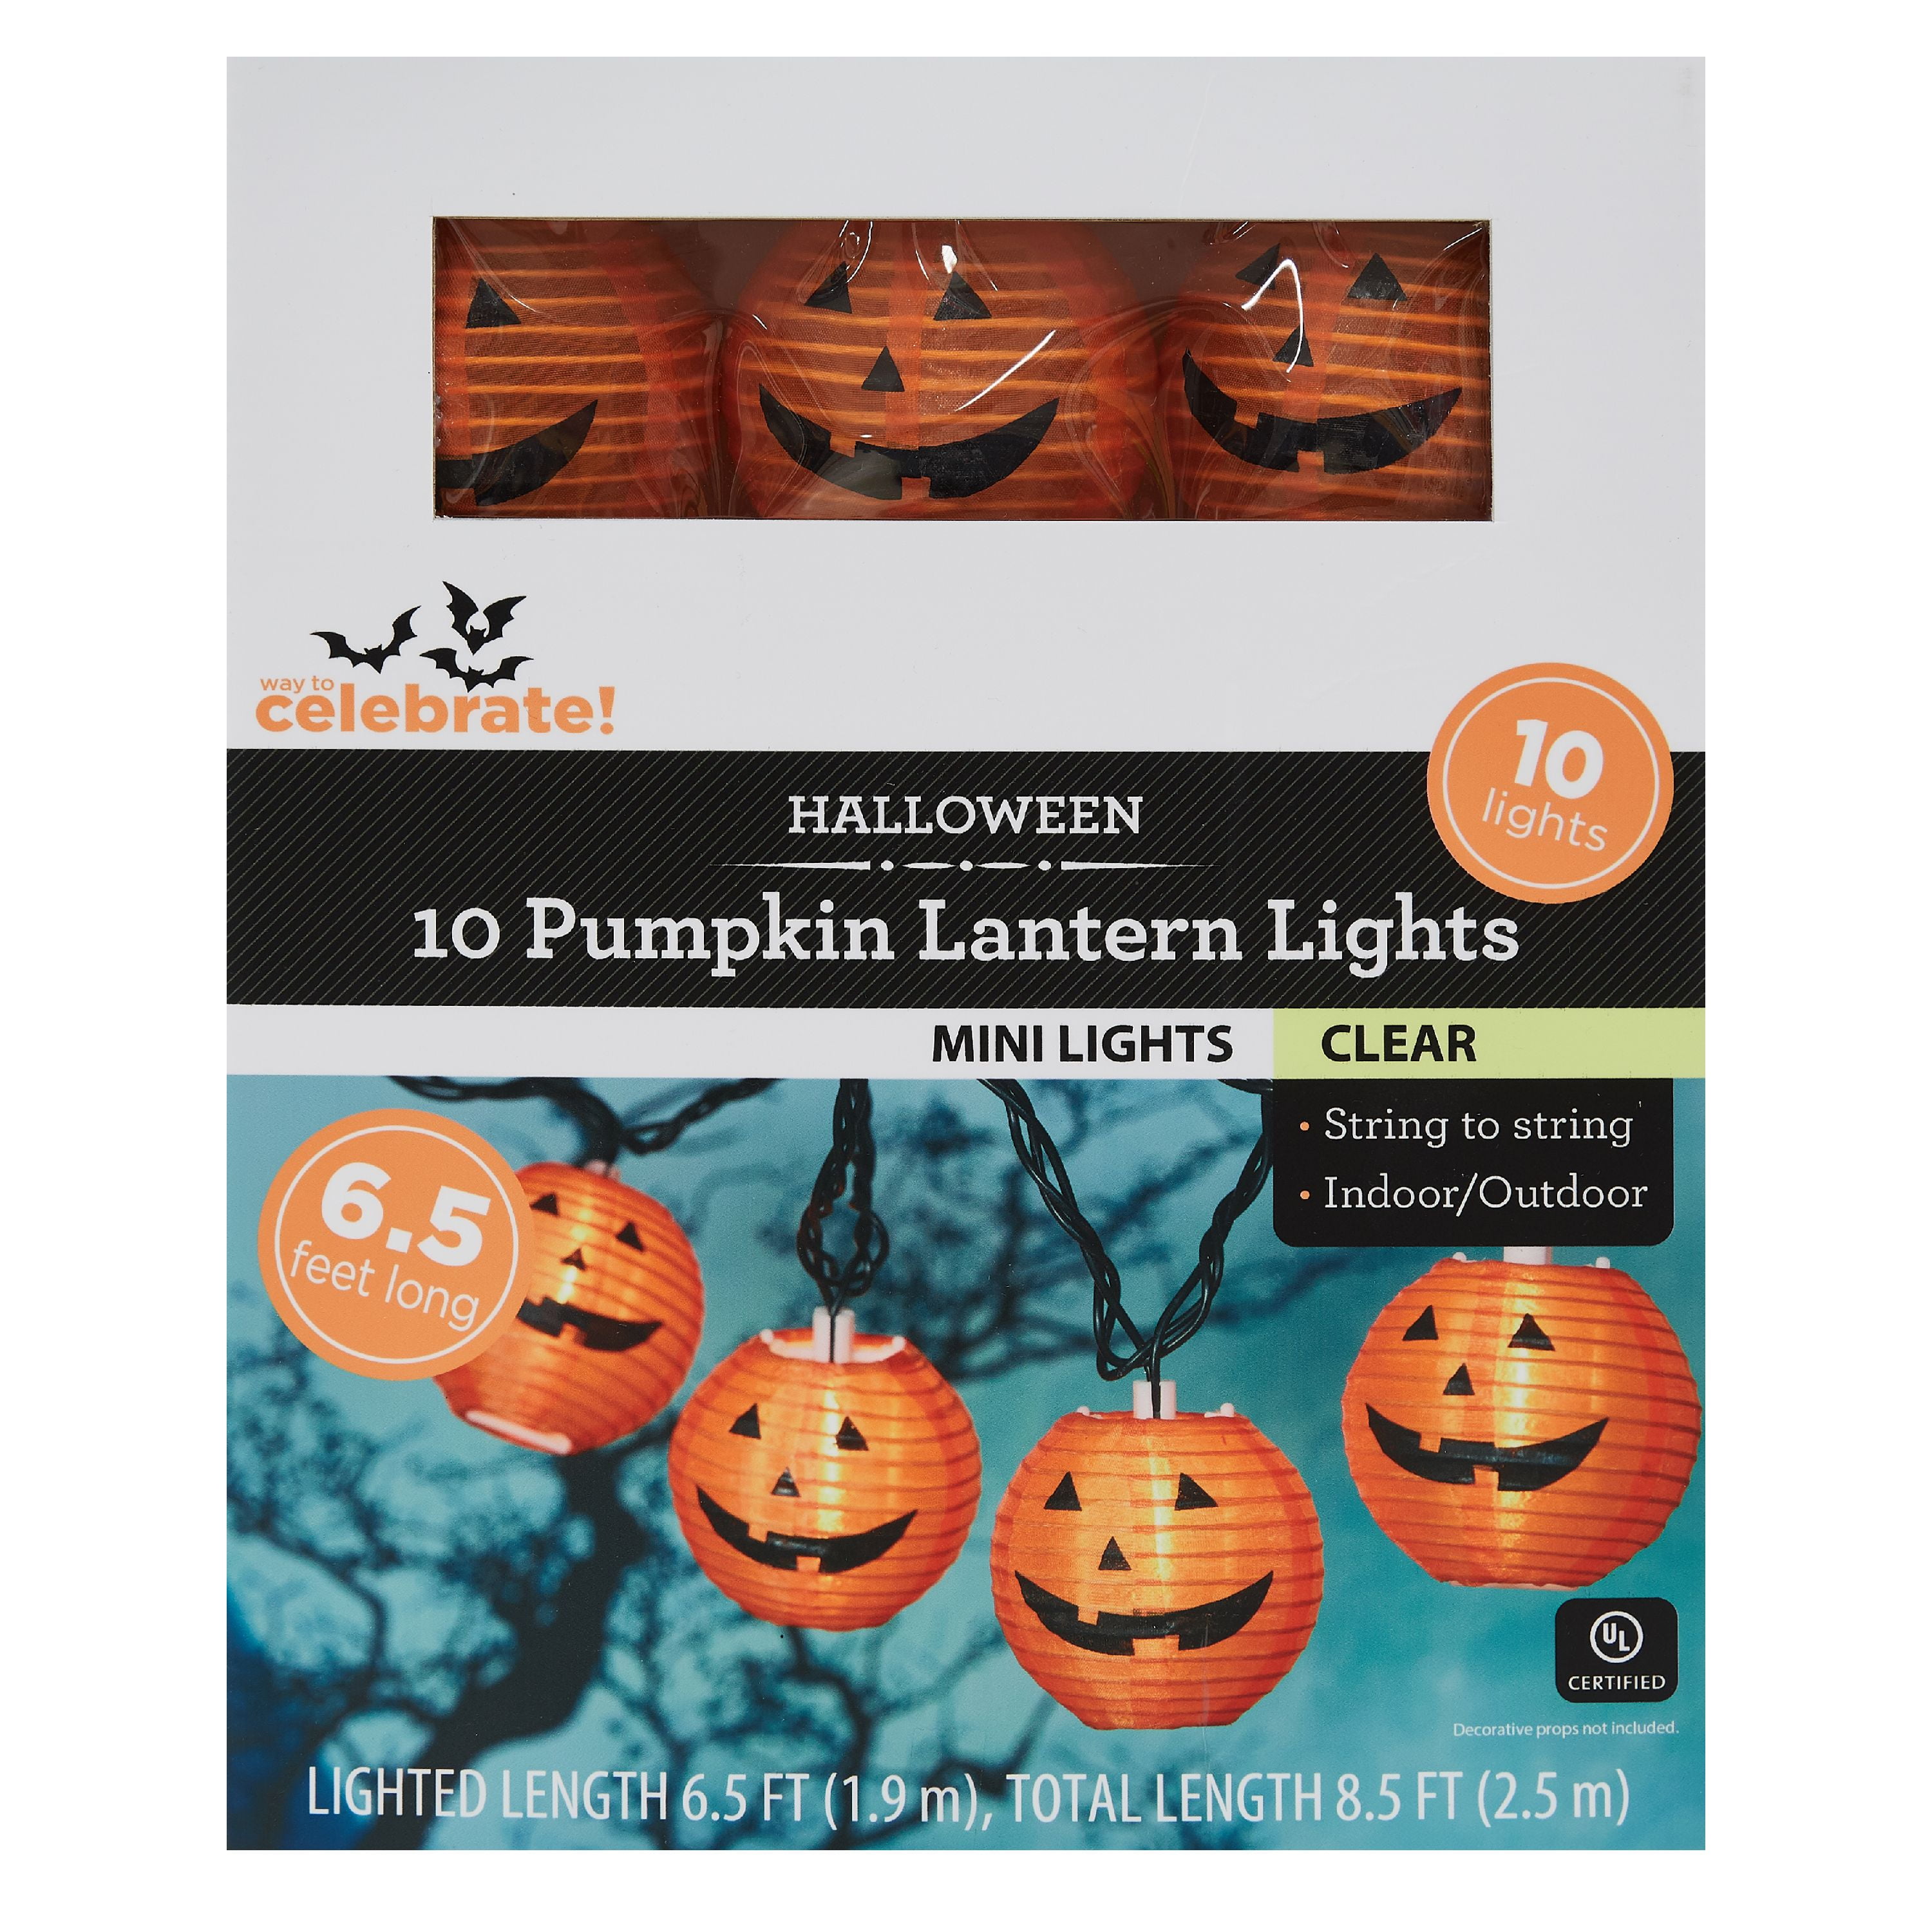 Way To Celebrate Halloween Pumpkin Lantern Lights - Walmart.com